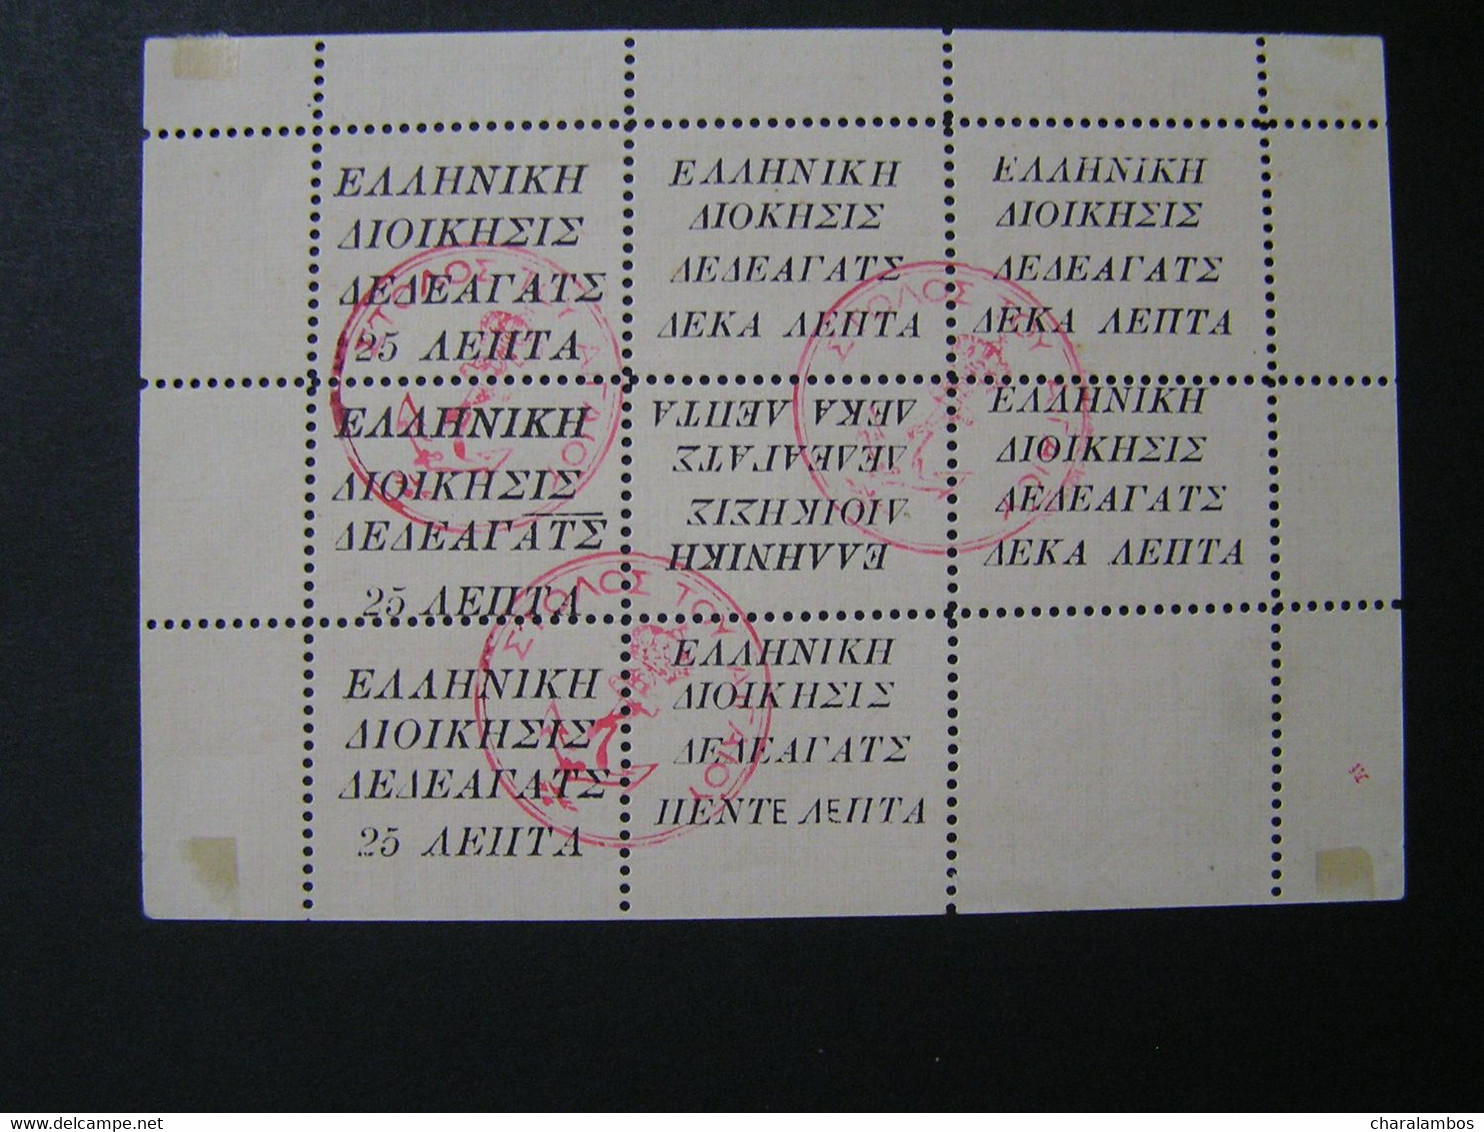 GREECE-Dedeagatch 1st Label Issue SHEETLET F6 San Gom Sheetlets Or Stamps Of Wat.. - Dedeagatch